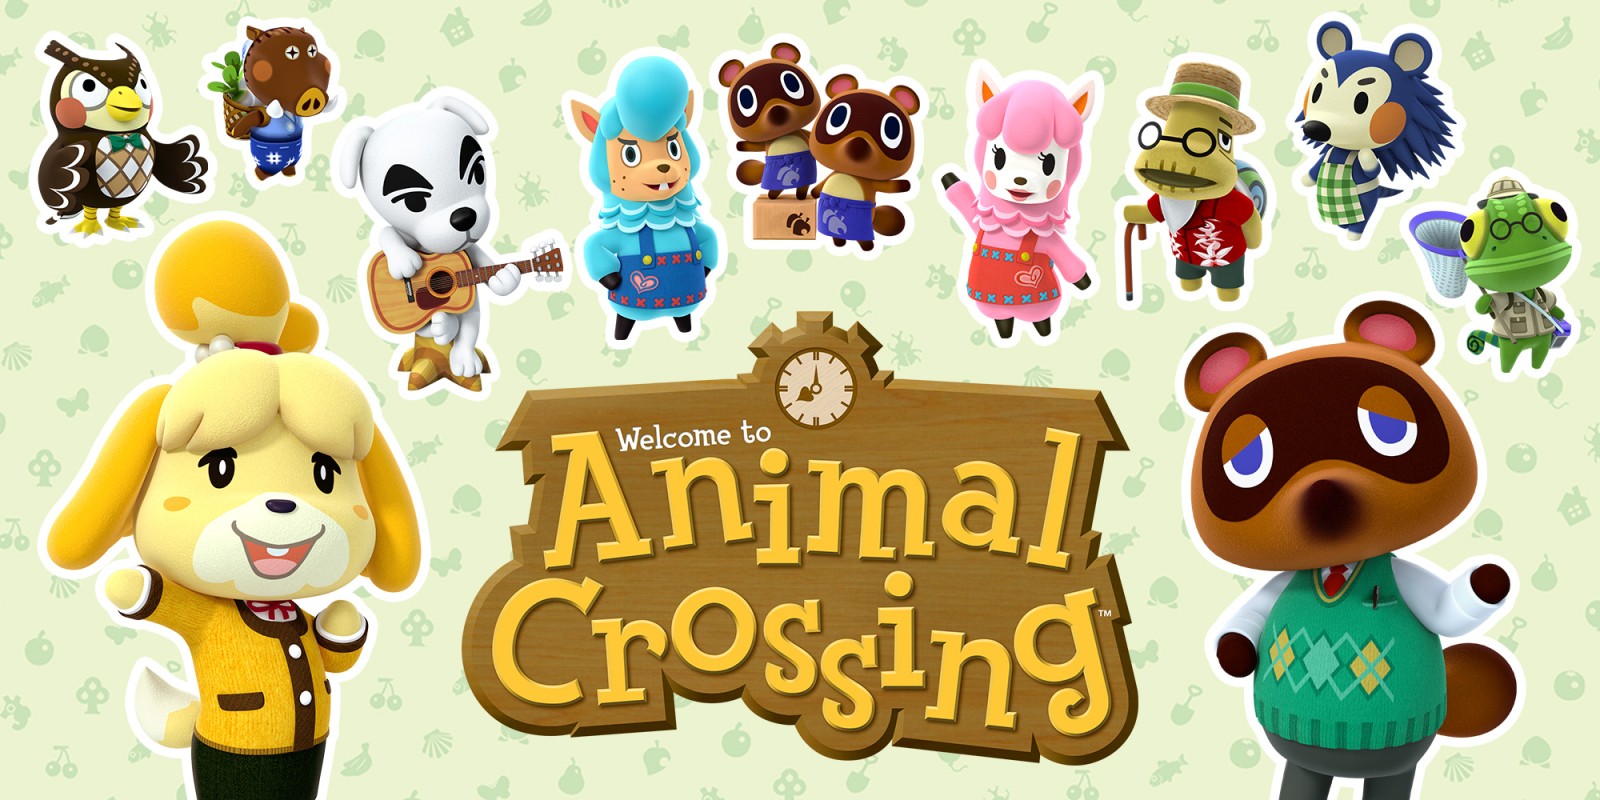 Portail Animal Crossing | Jeux | Nintendo